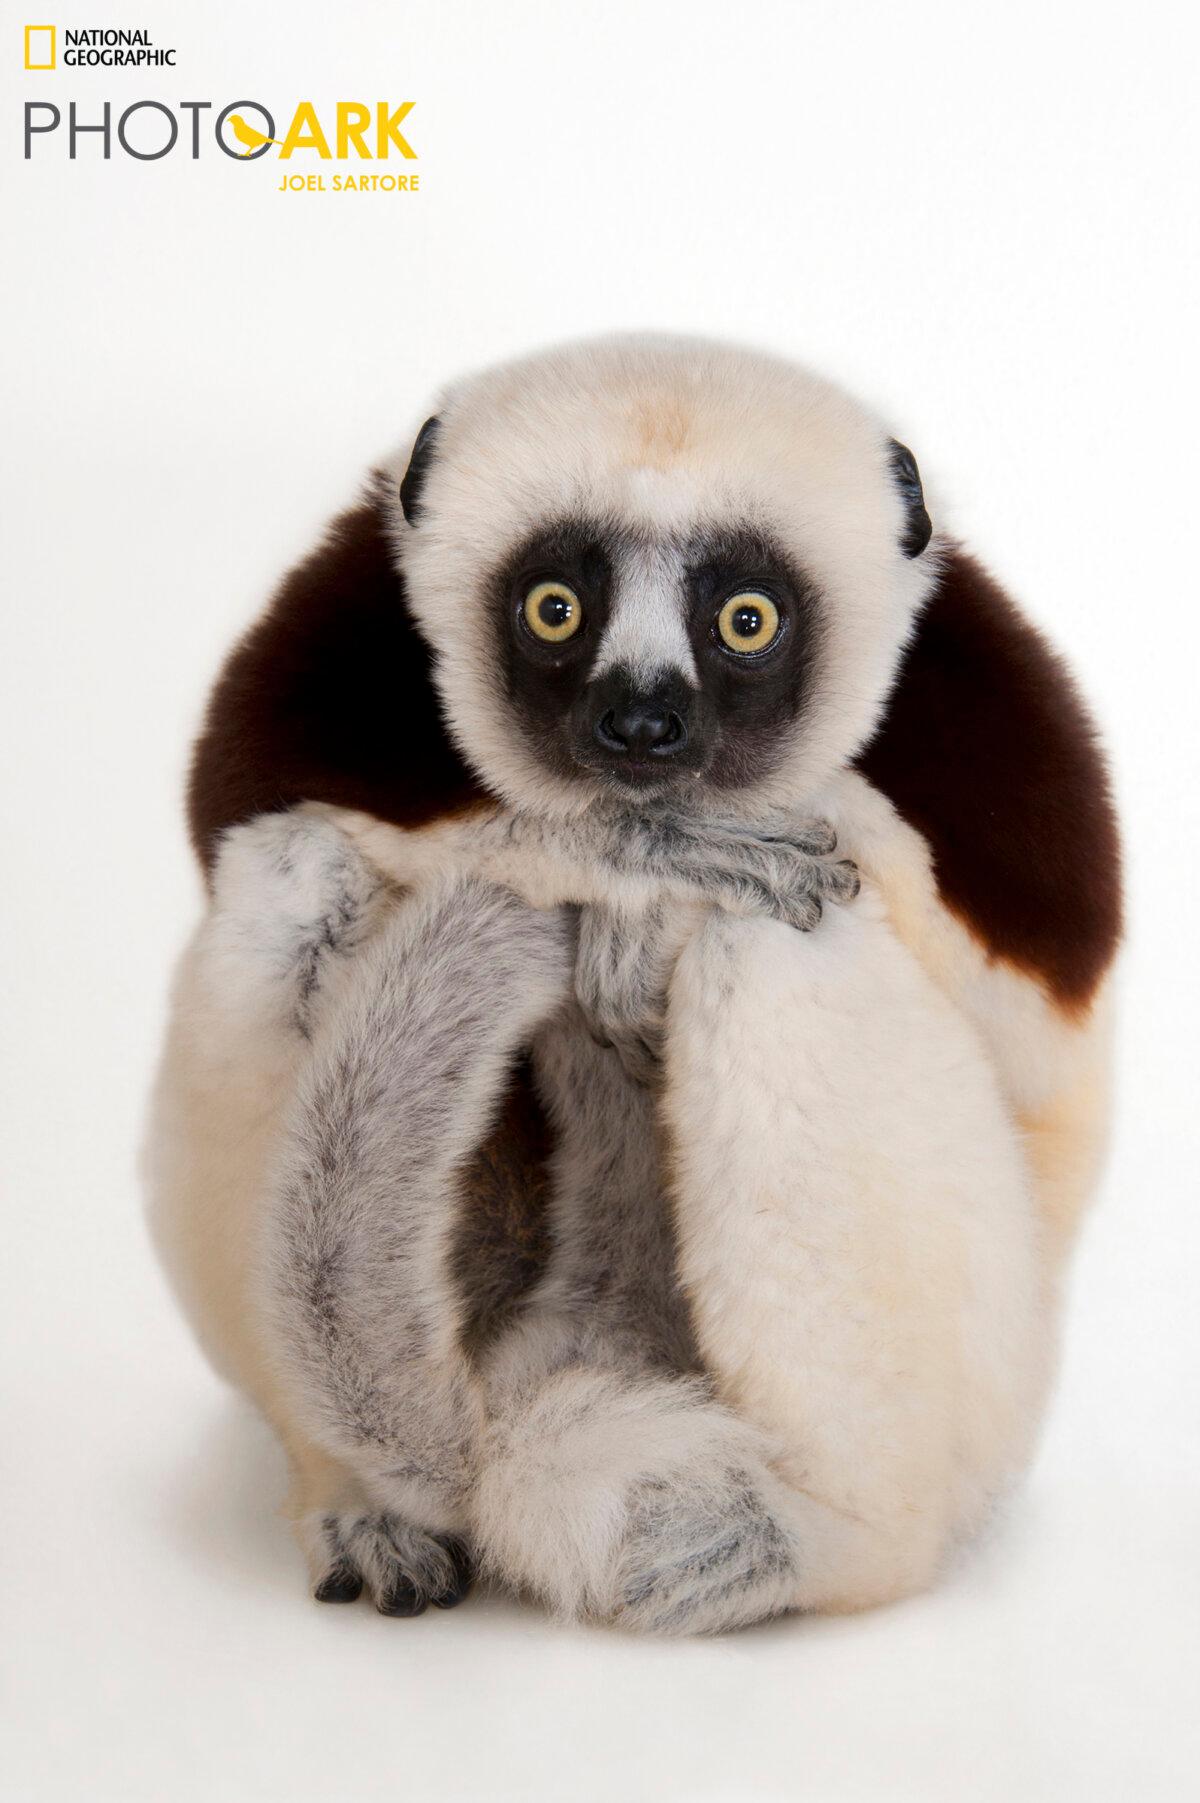 An endangered Coquerel’s sifaka, a species of lemur. (Joel Sartore/National Geographic Photo Ark natgeophotoark.org)